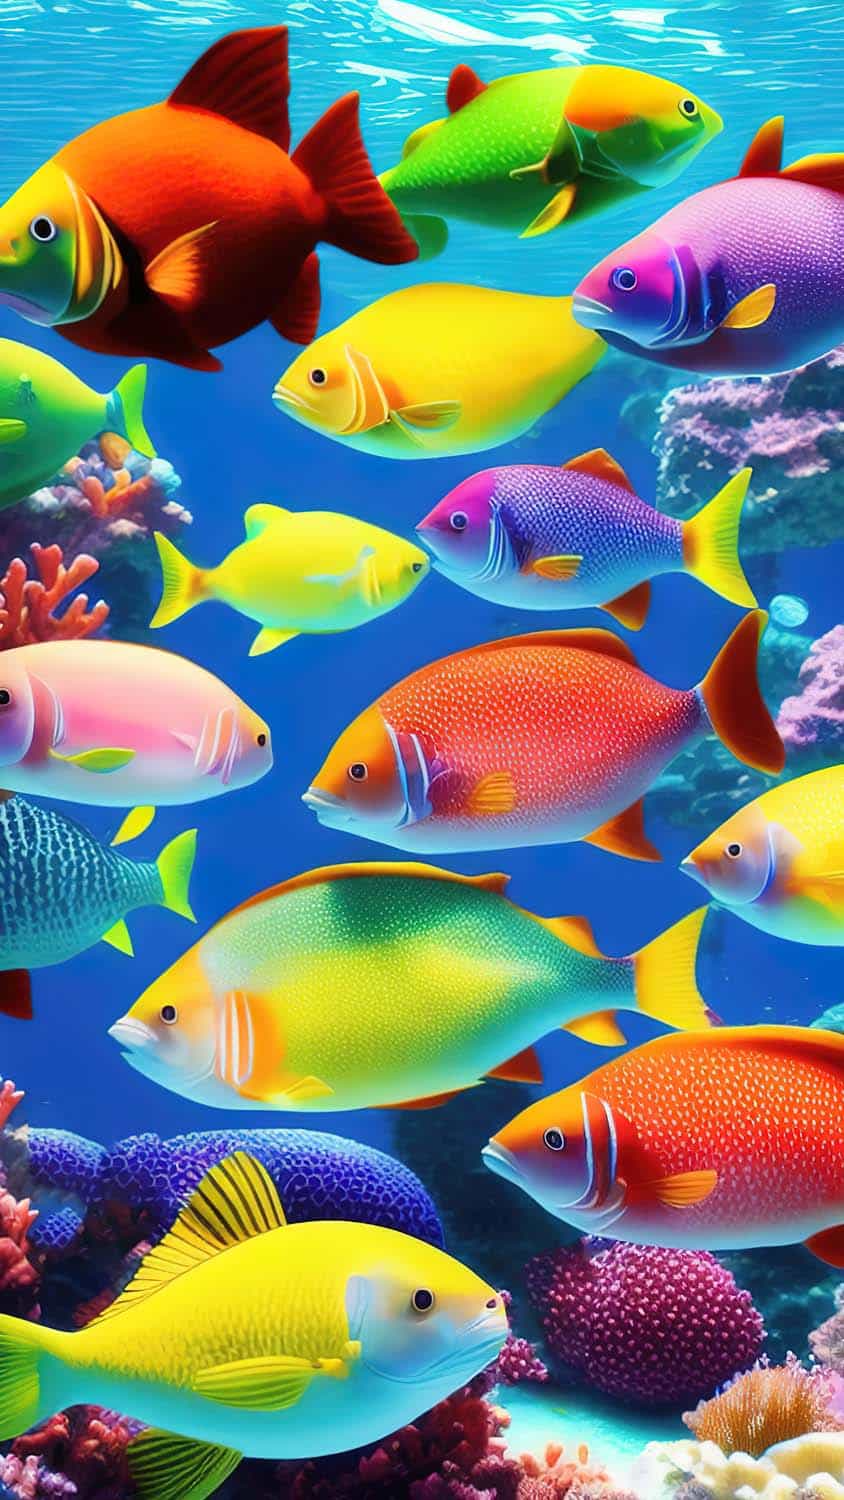 Aquarium Fishes IPhone Wallpaper HD  IPhone Wallpapers